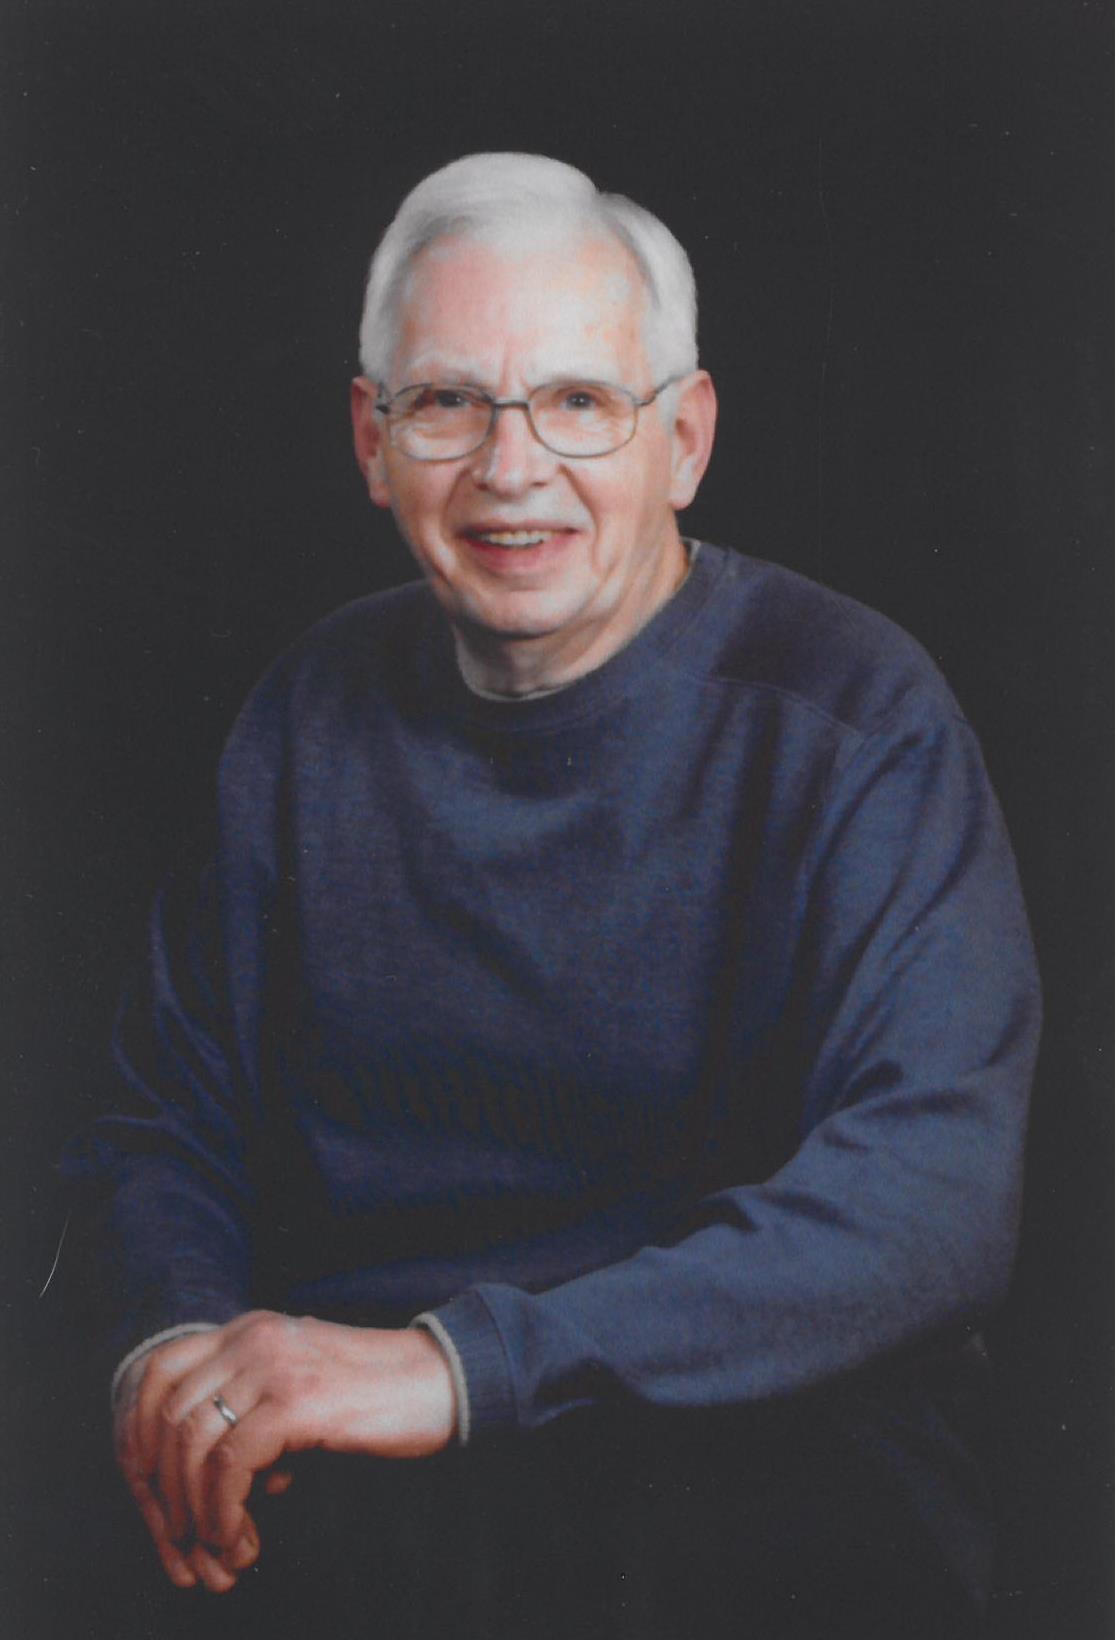 Jim Thorell